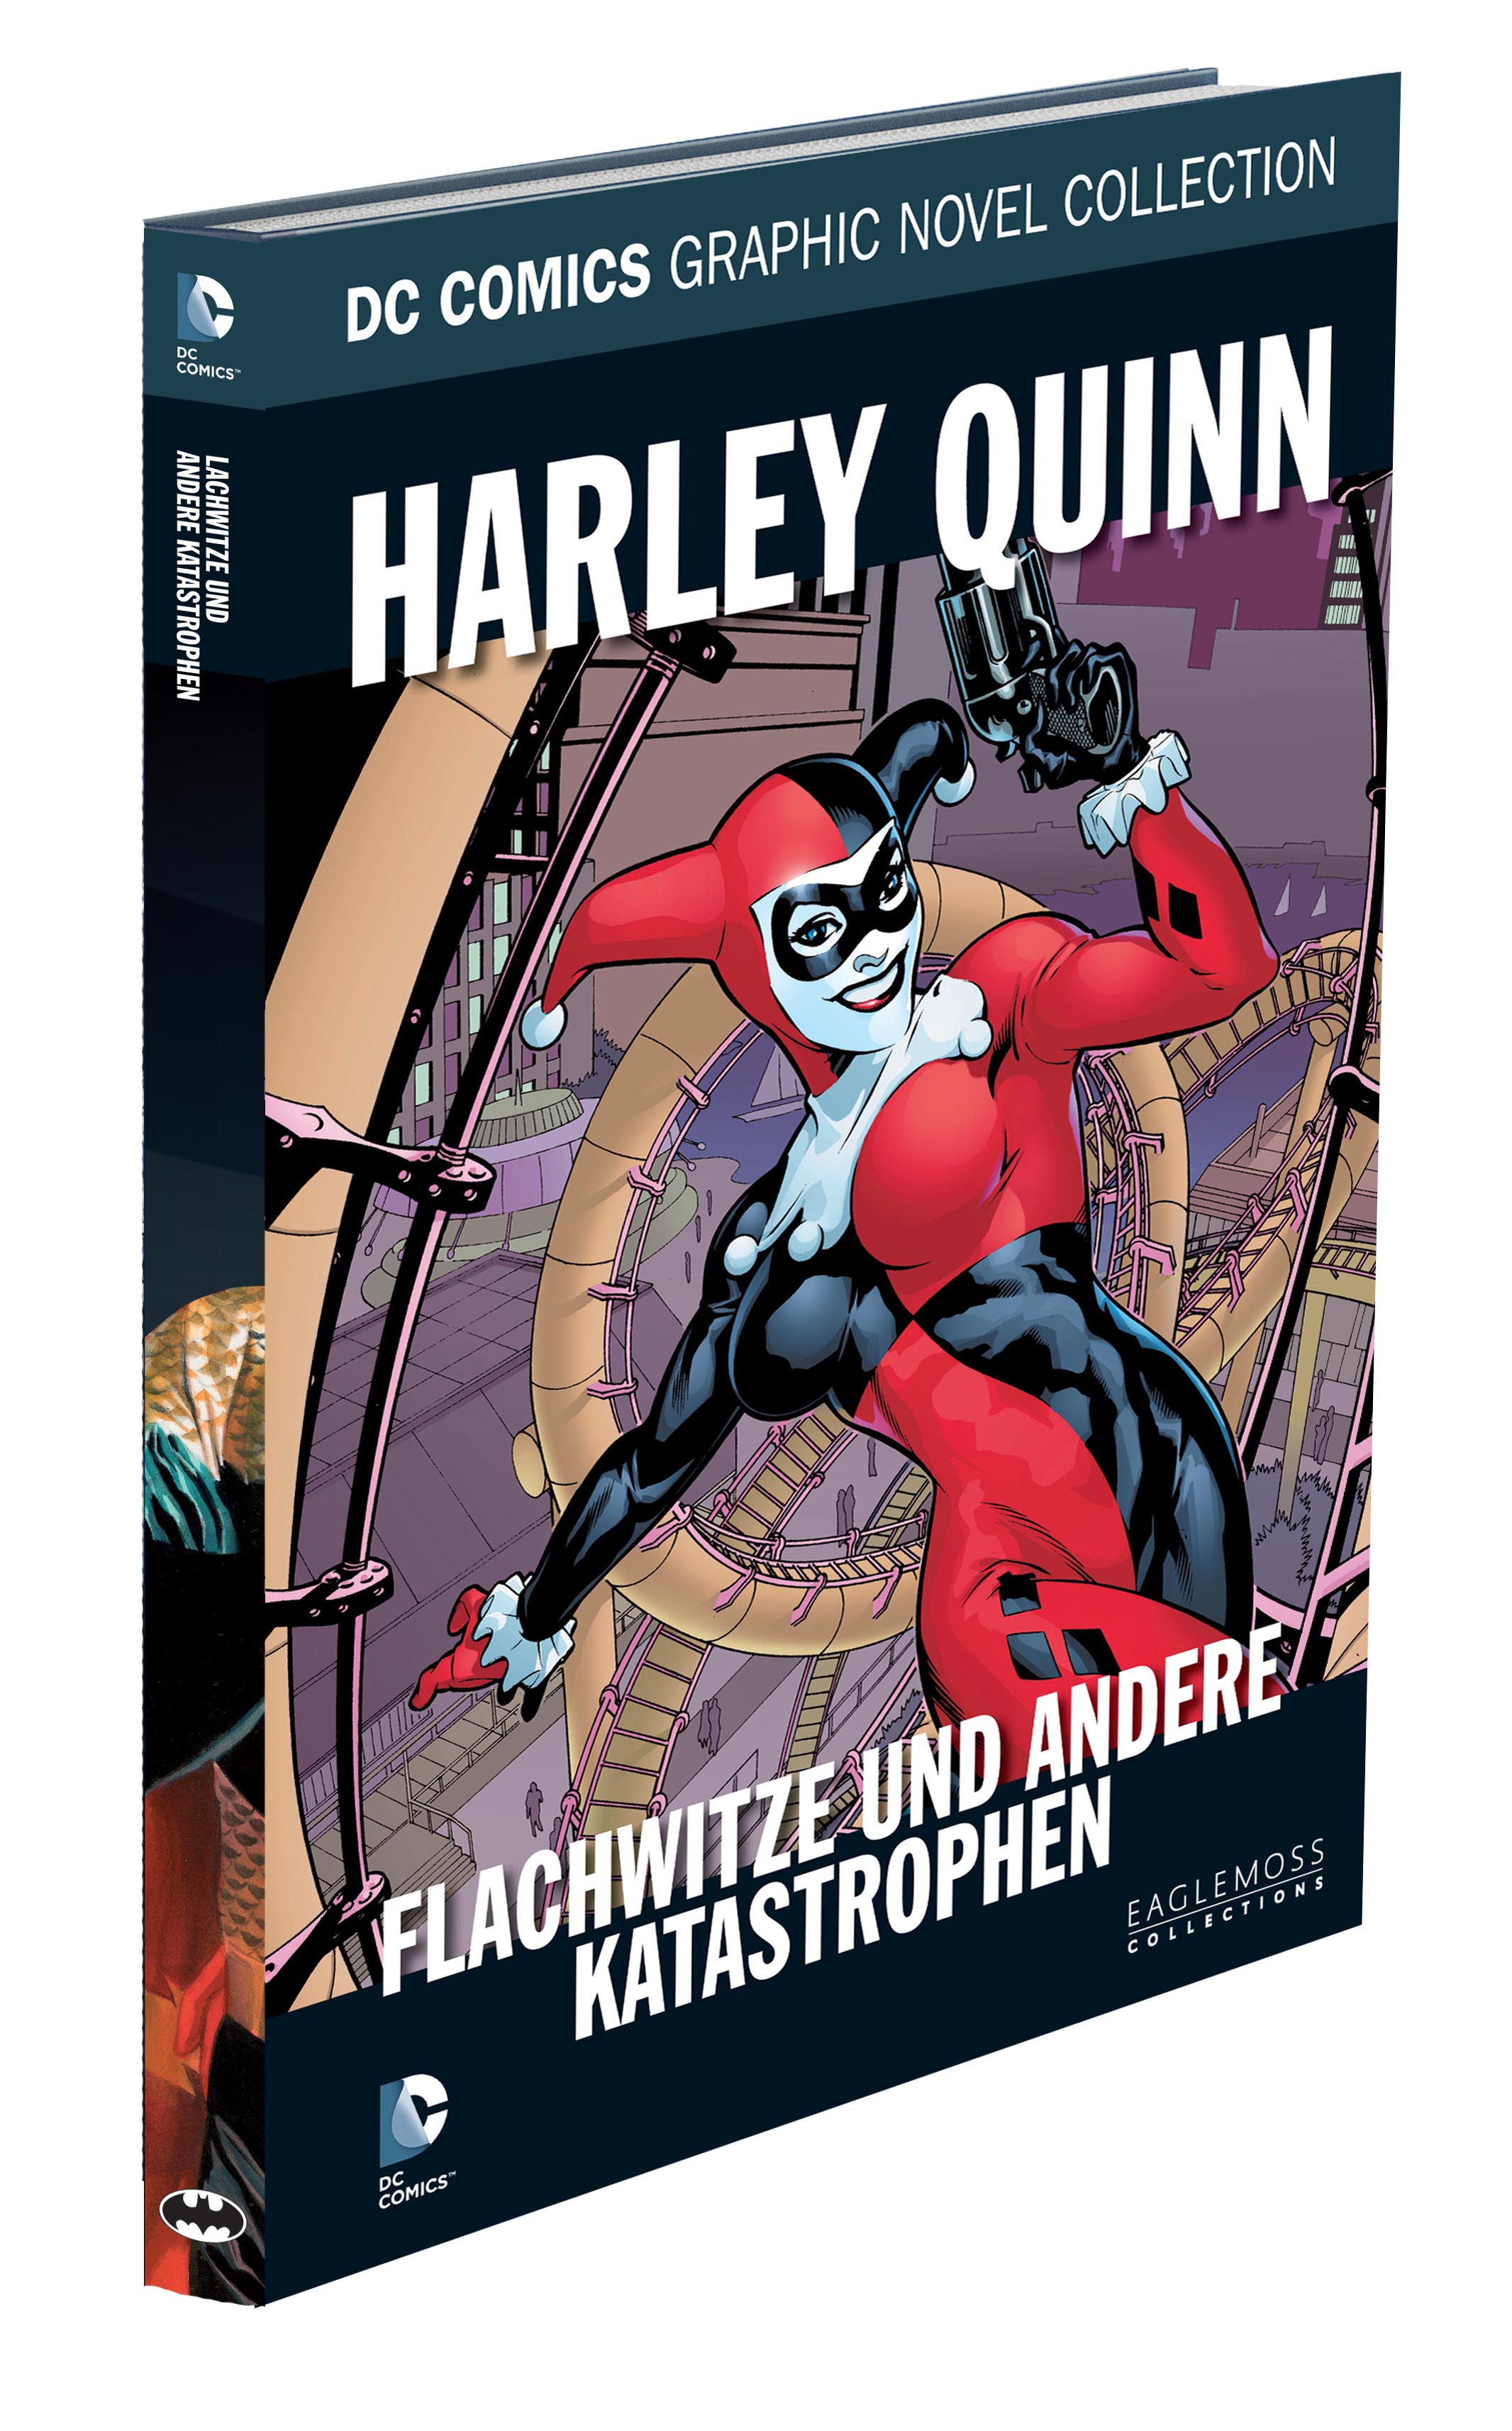 DC Comics Graphic Novel Collection Harley Quinn - Flachwitze und andere Katastrophen